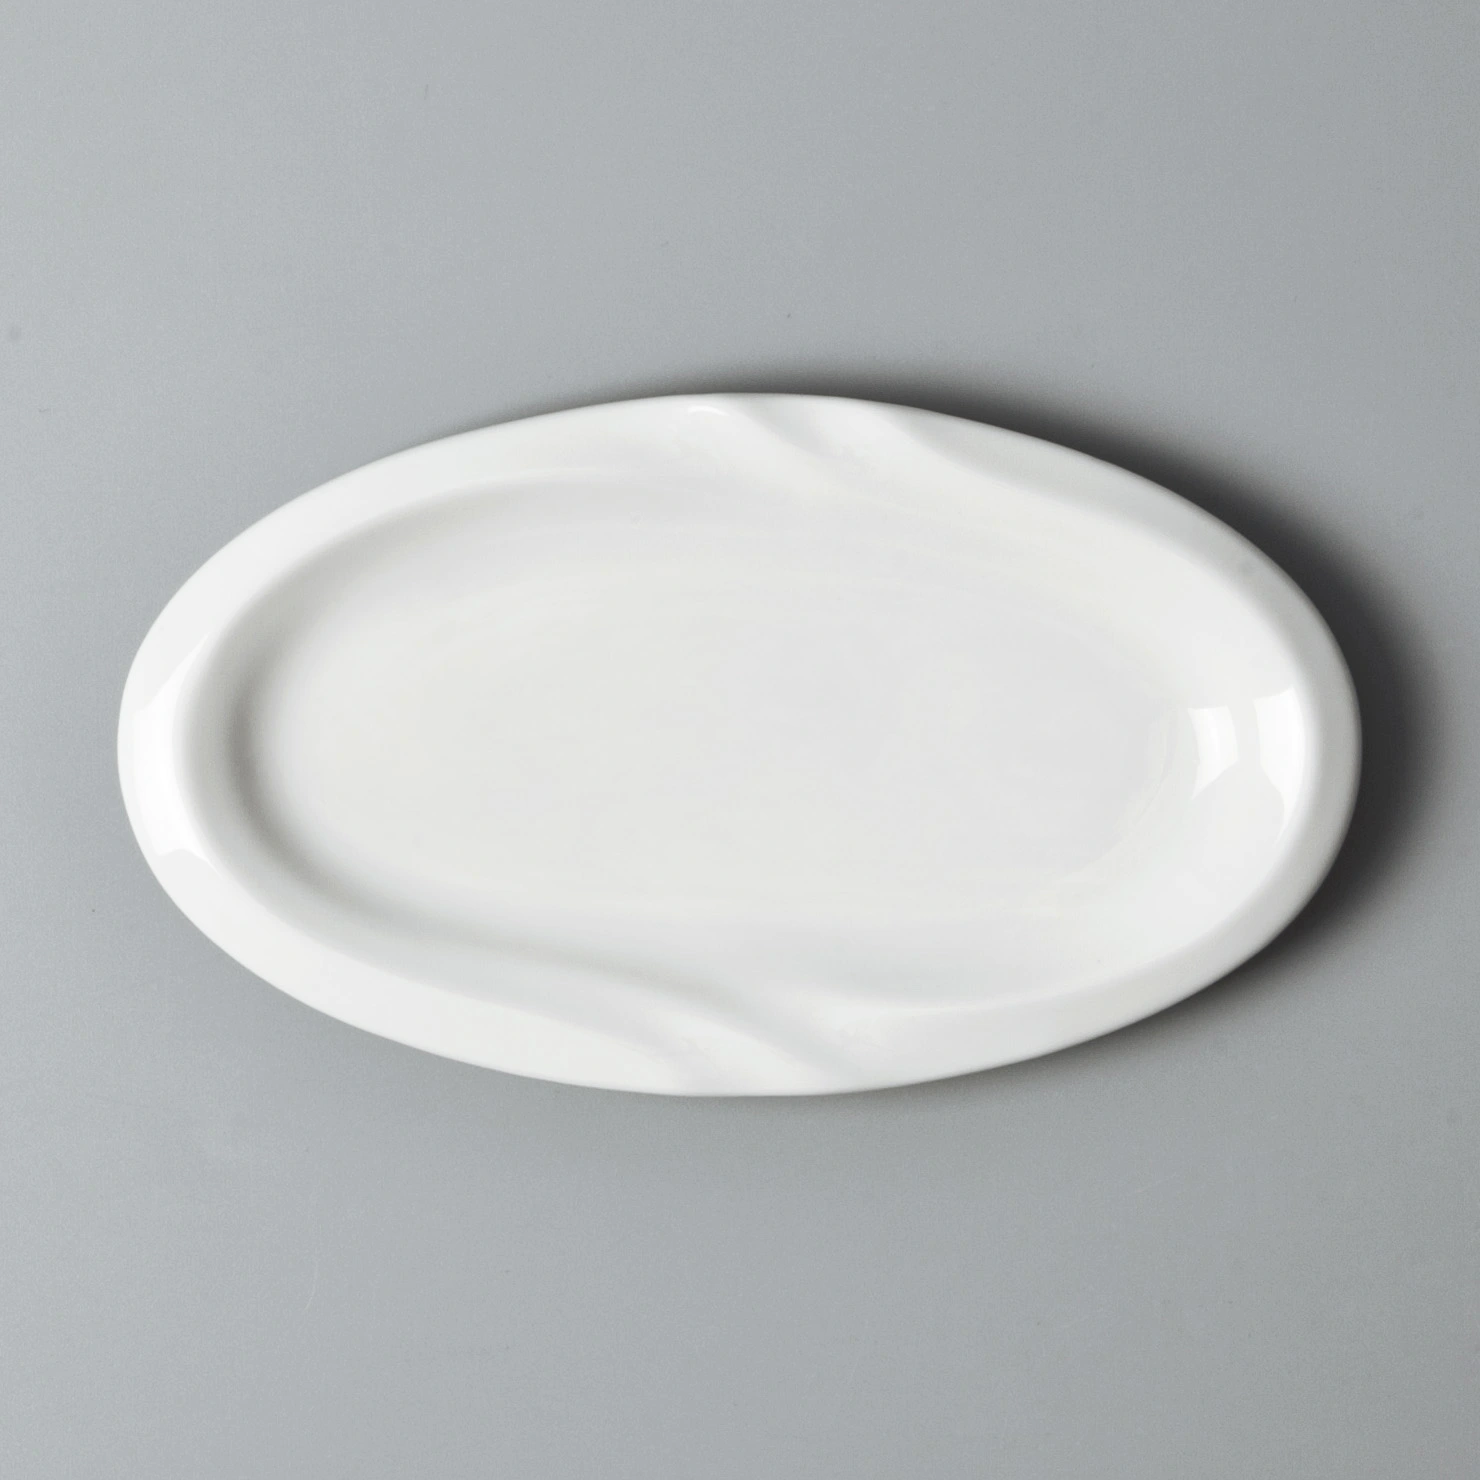 rim white plate set series for hotel